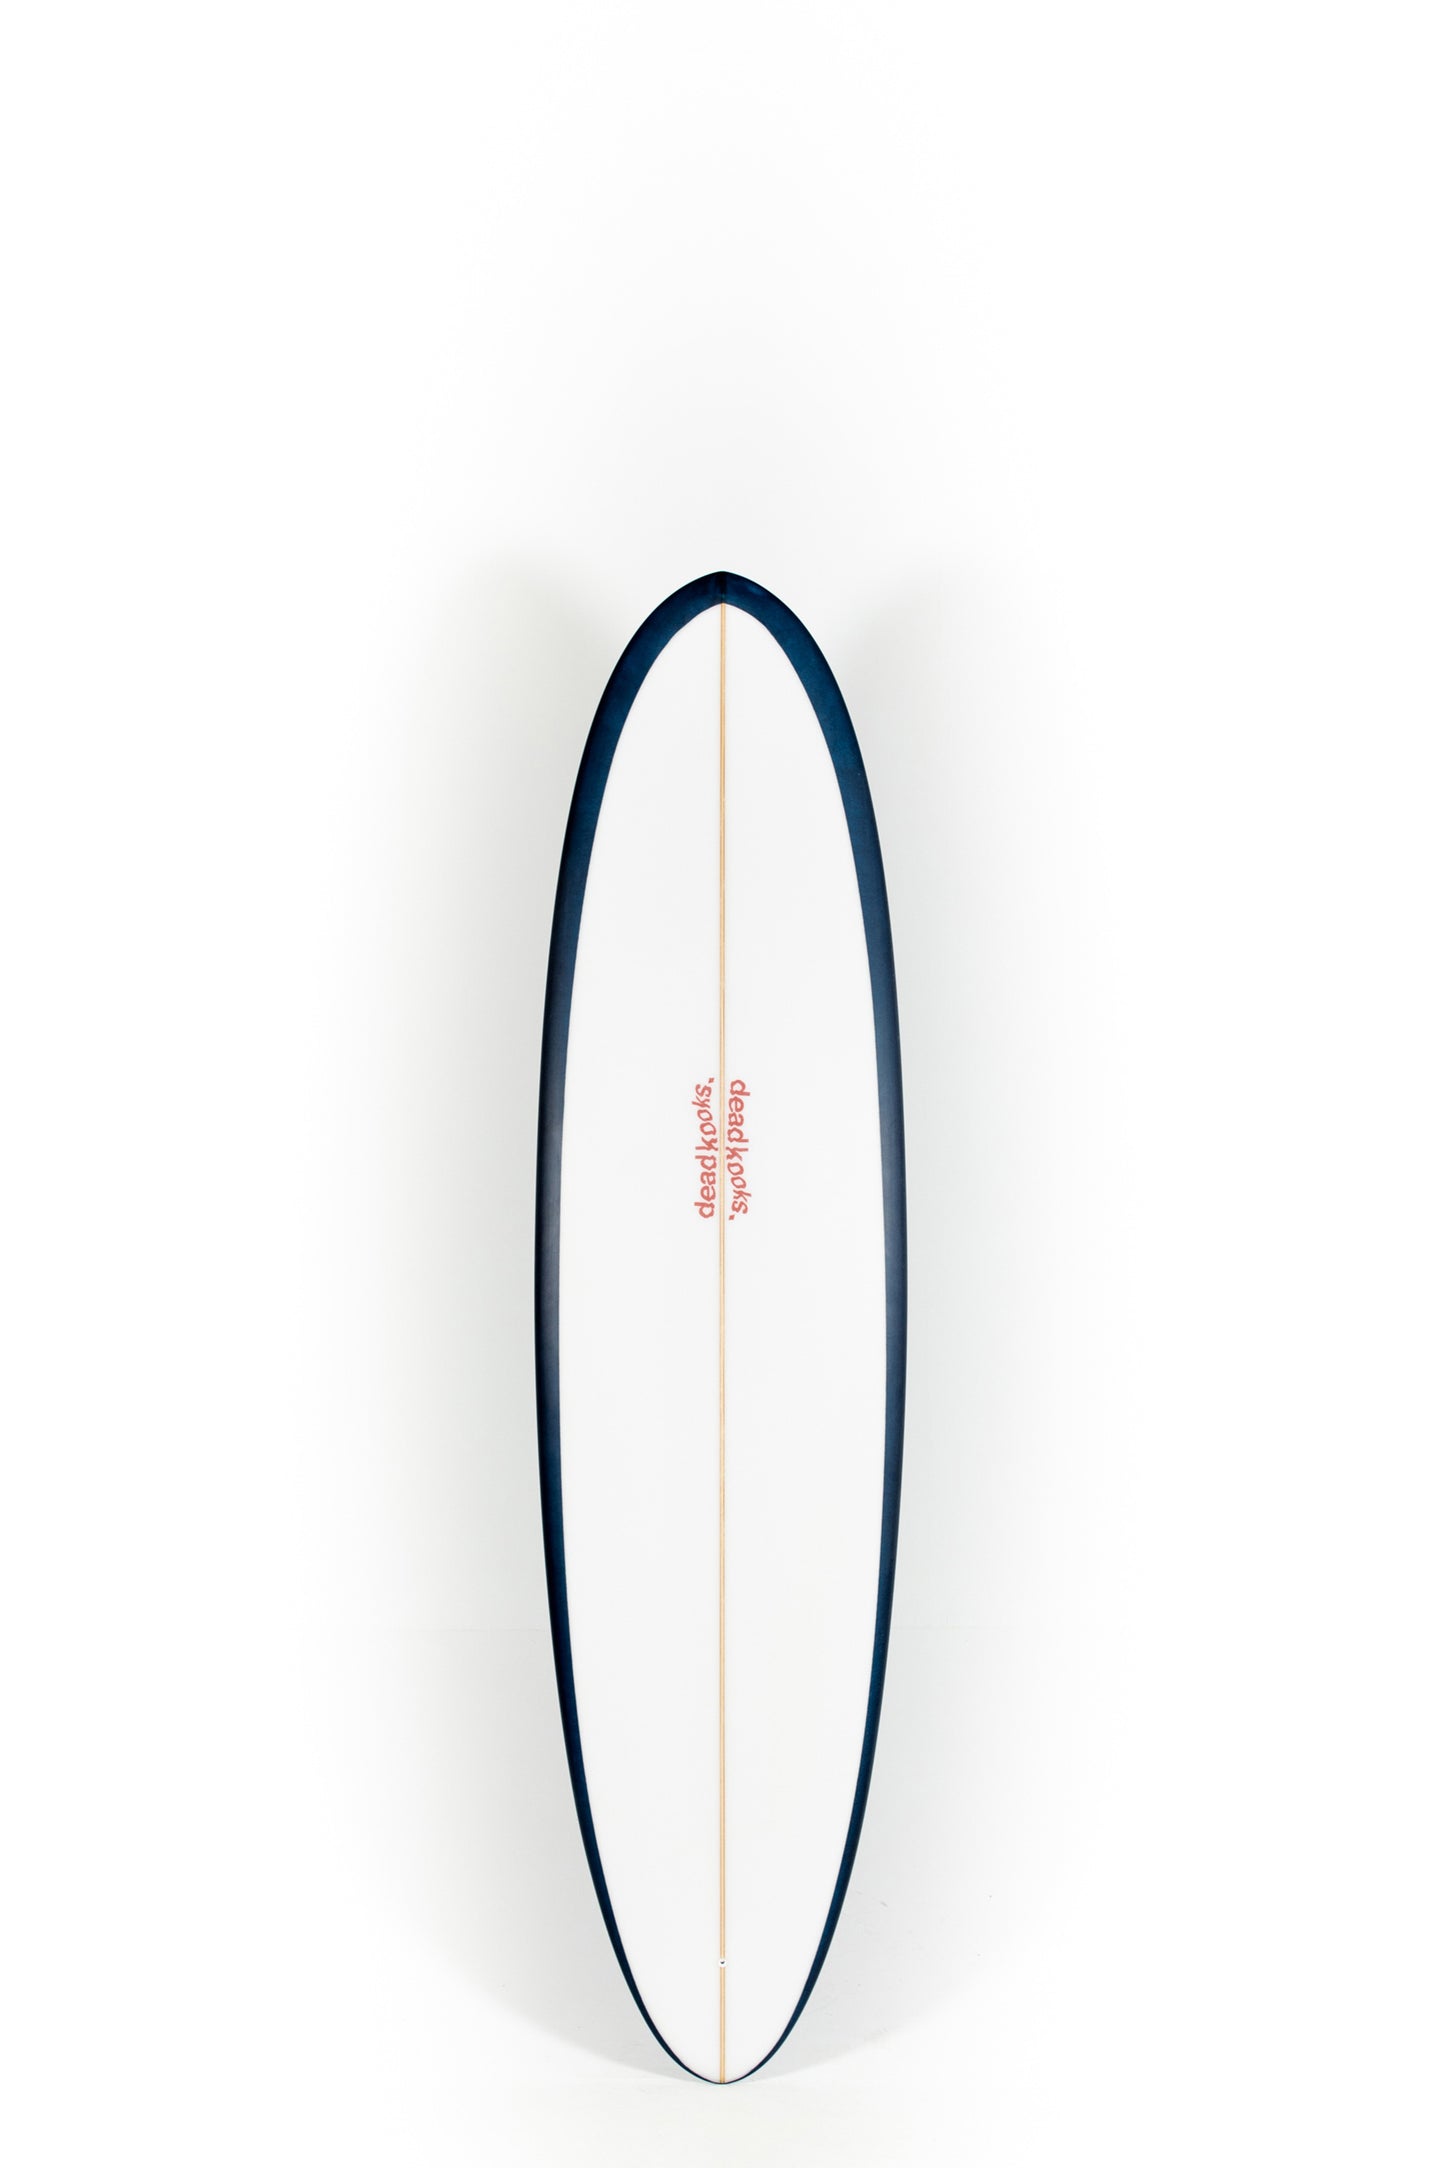 Pukas Surf Shop - Dead Kooks - SALTY - 6'10" - SALTY610